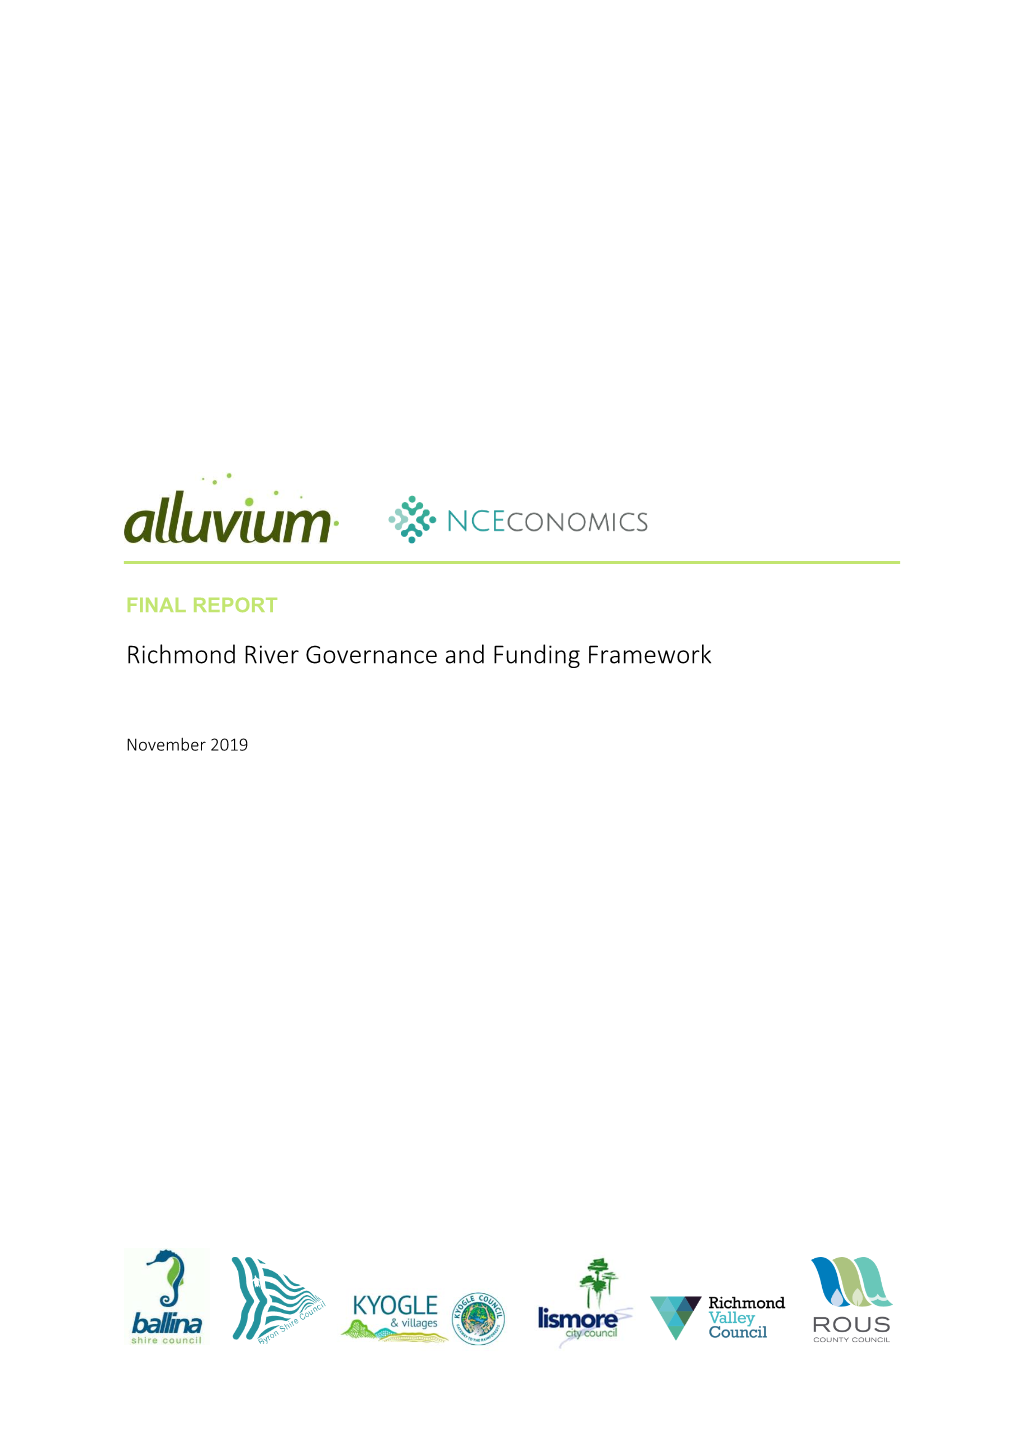 Richmond River Governance and Funding Framework, Final Report